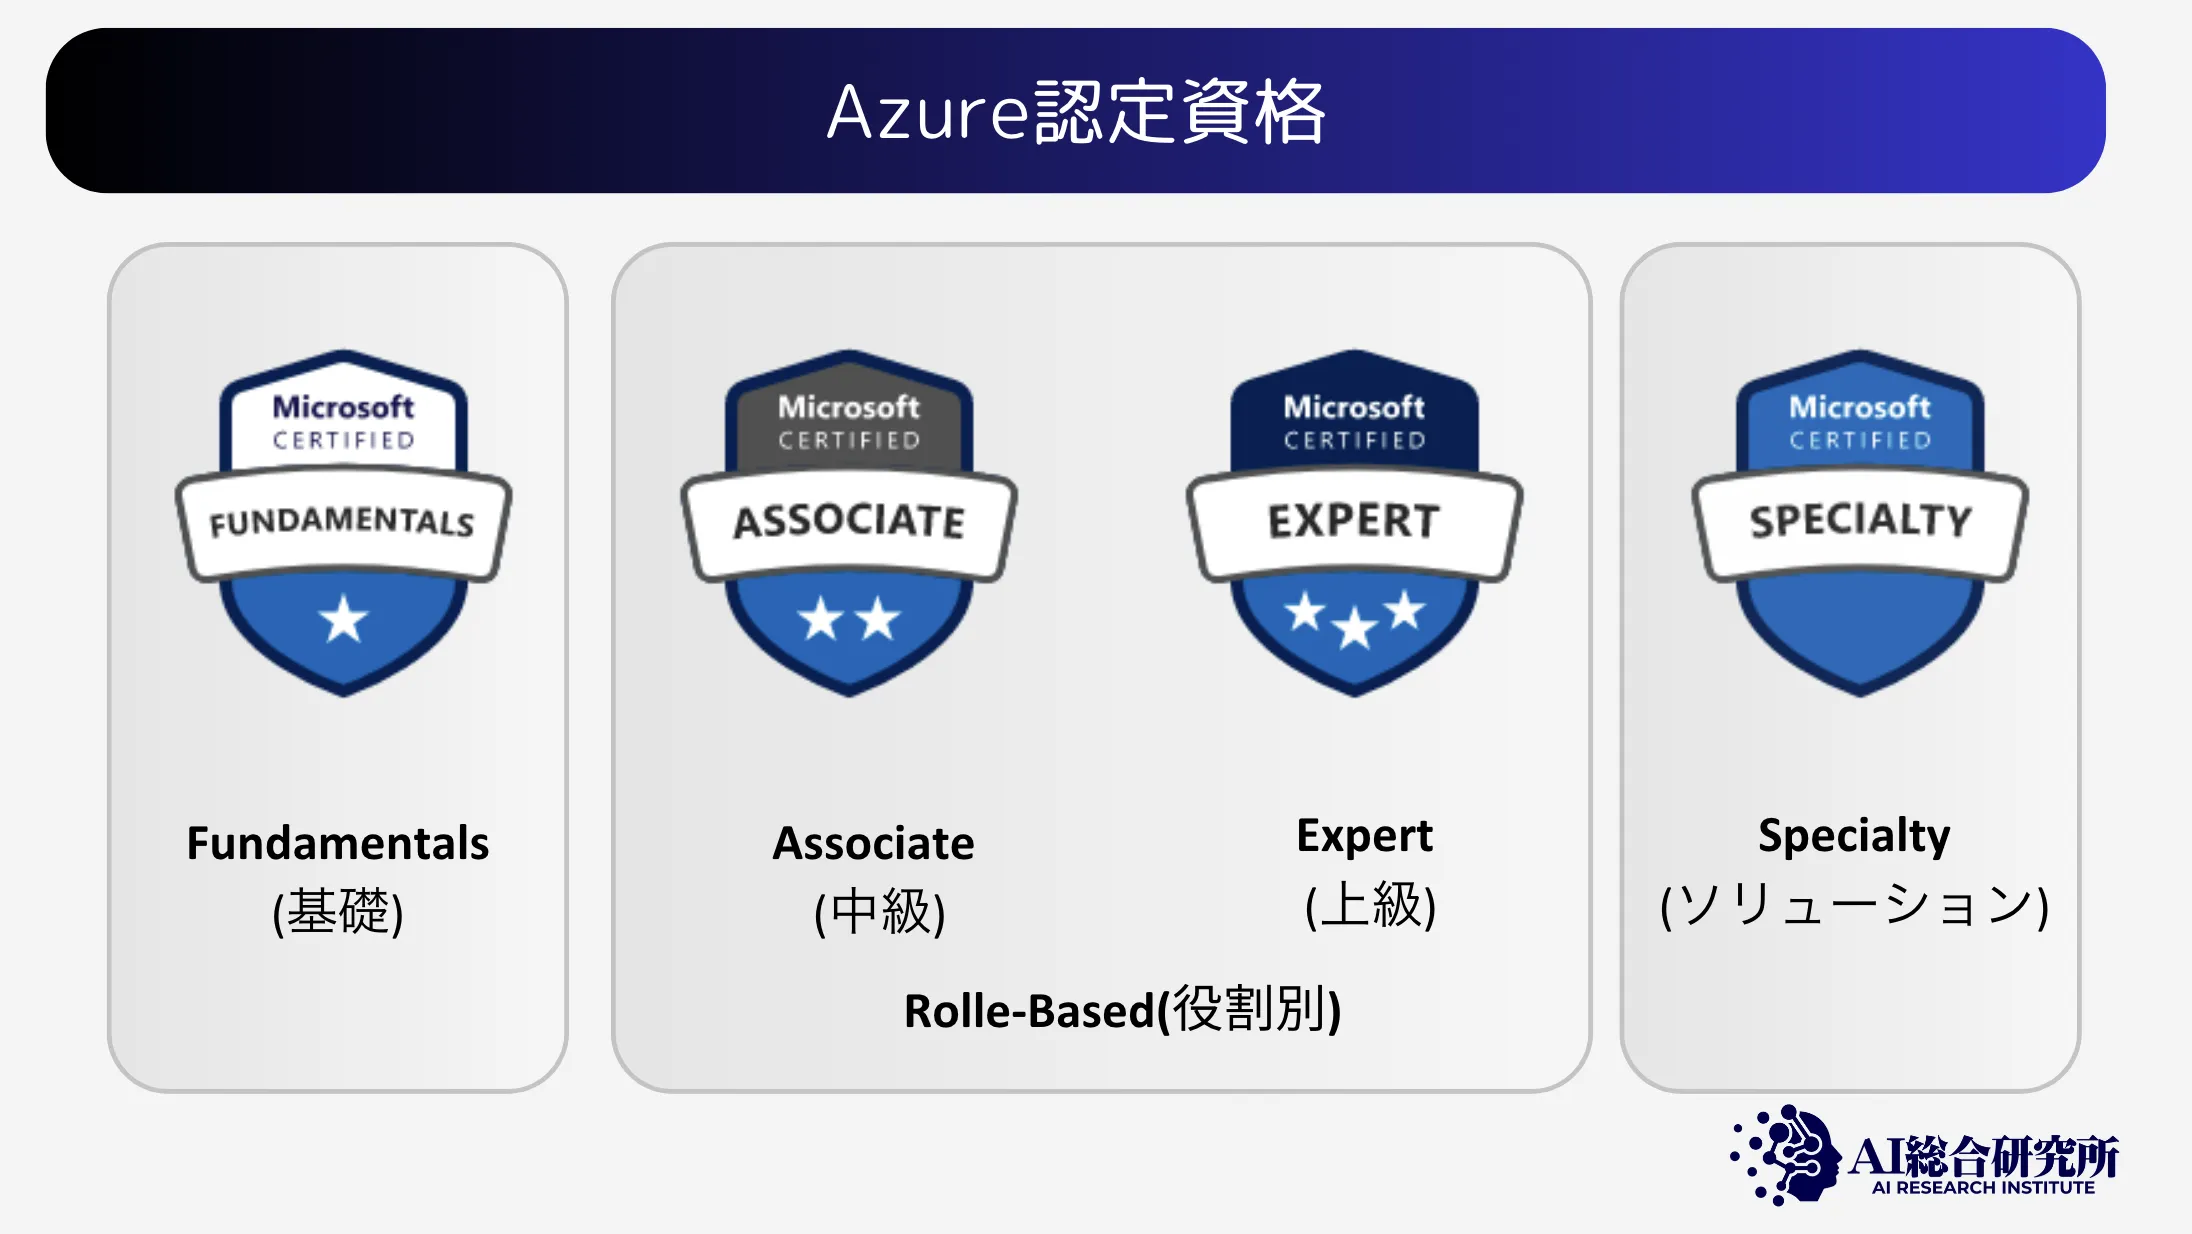 Azure認定資格について